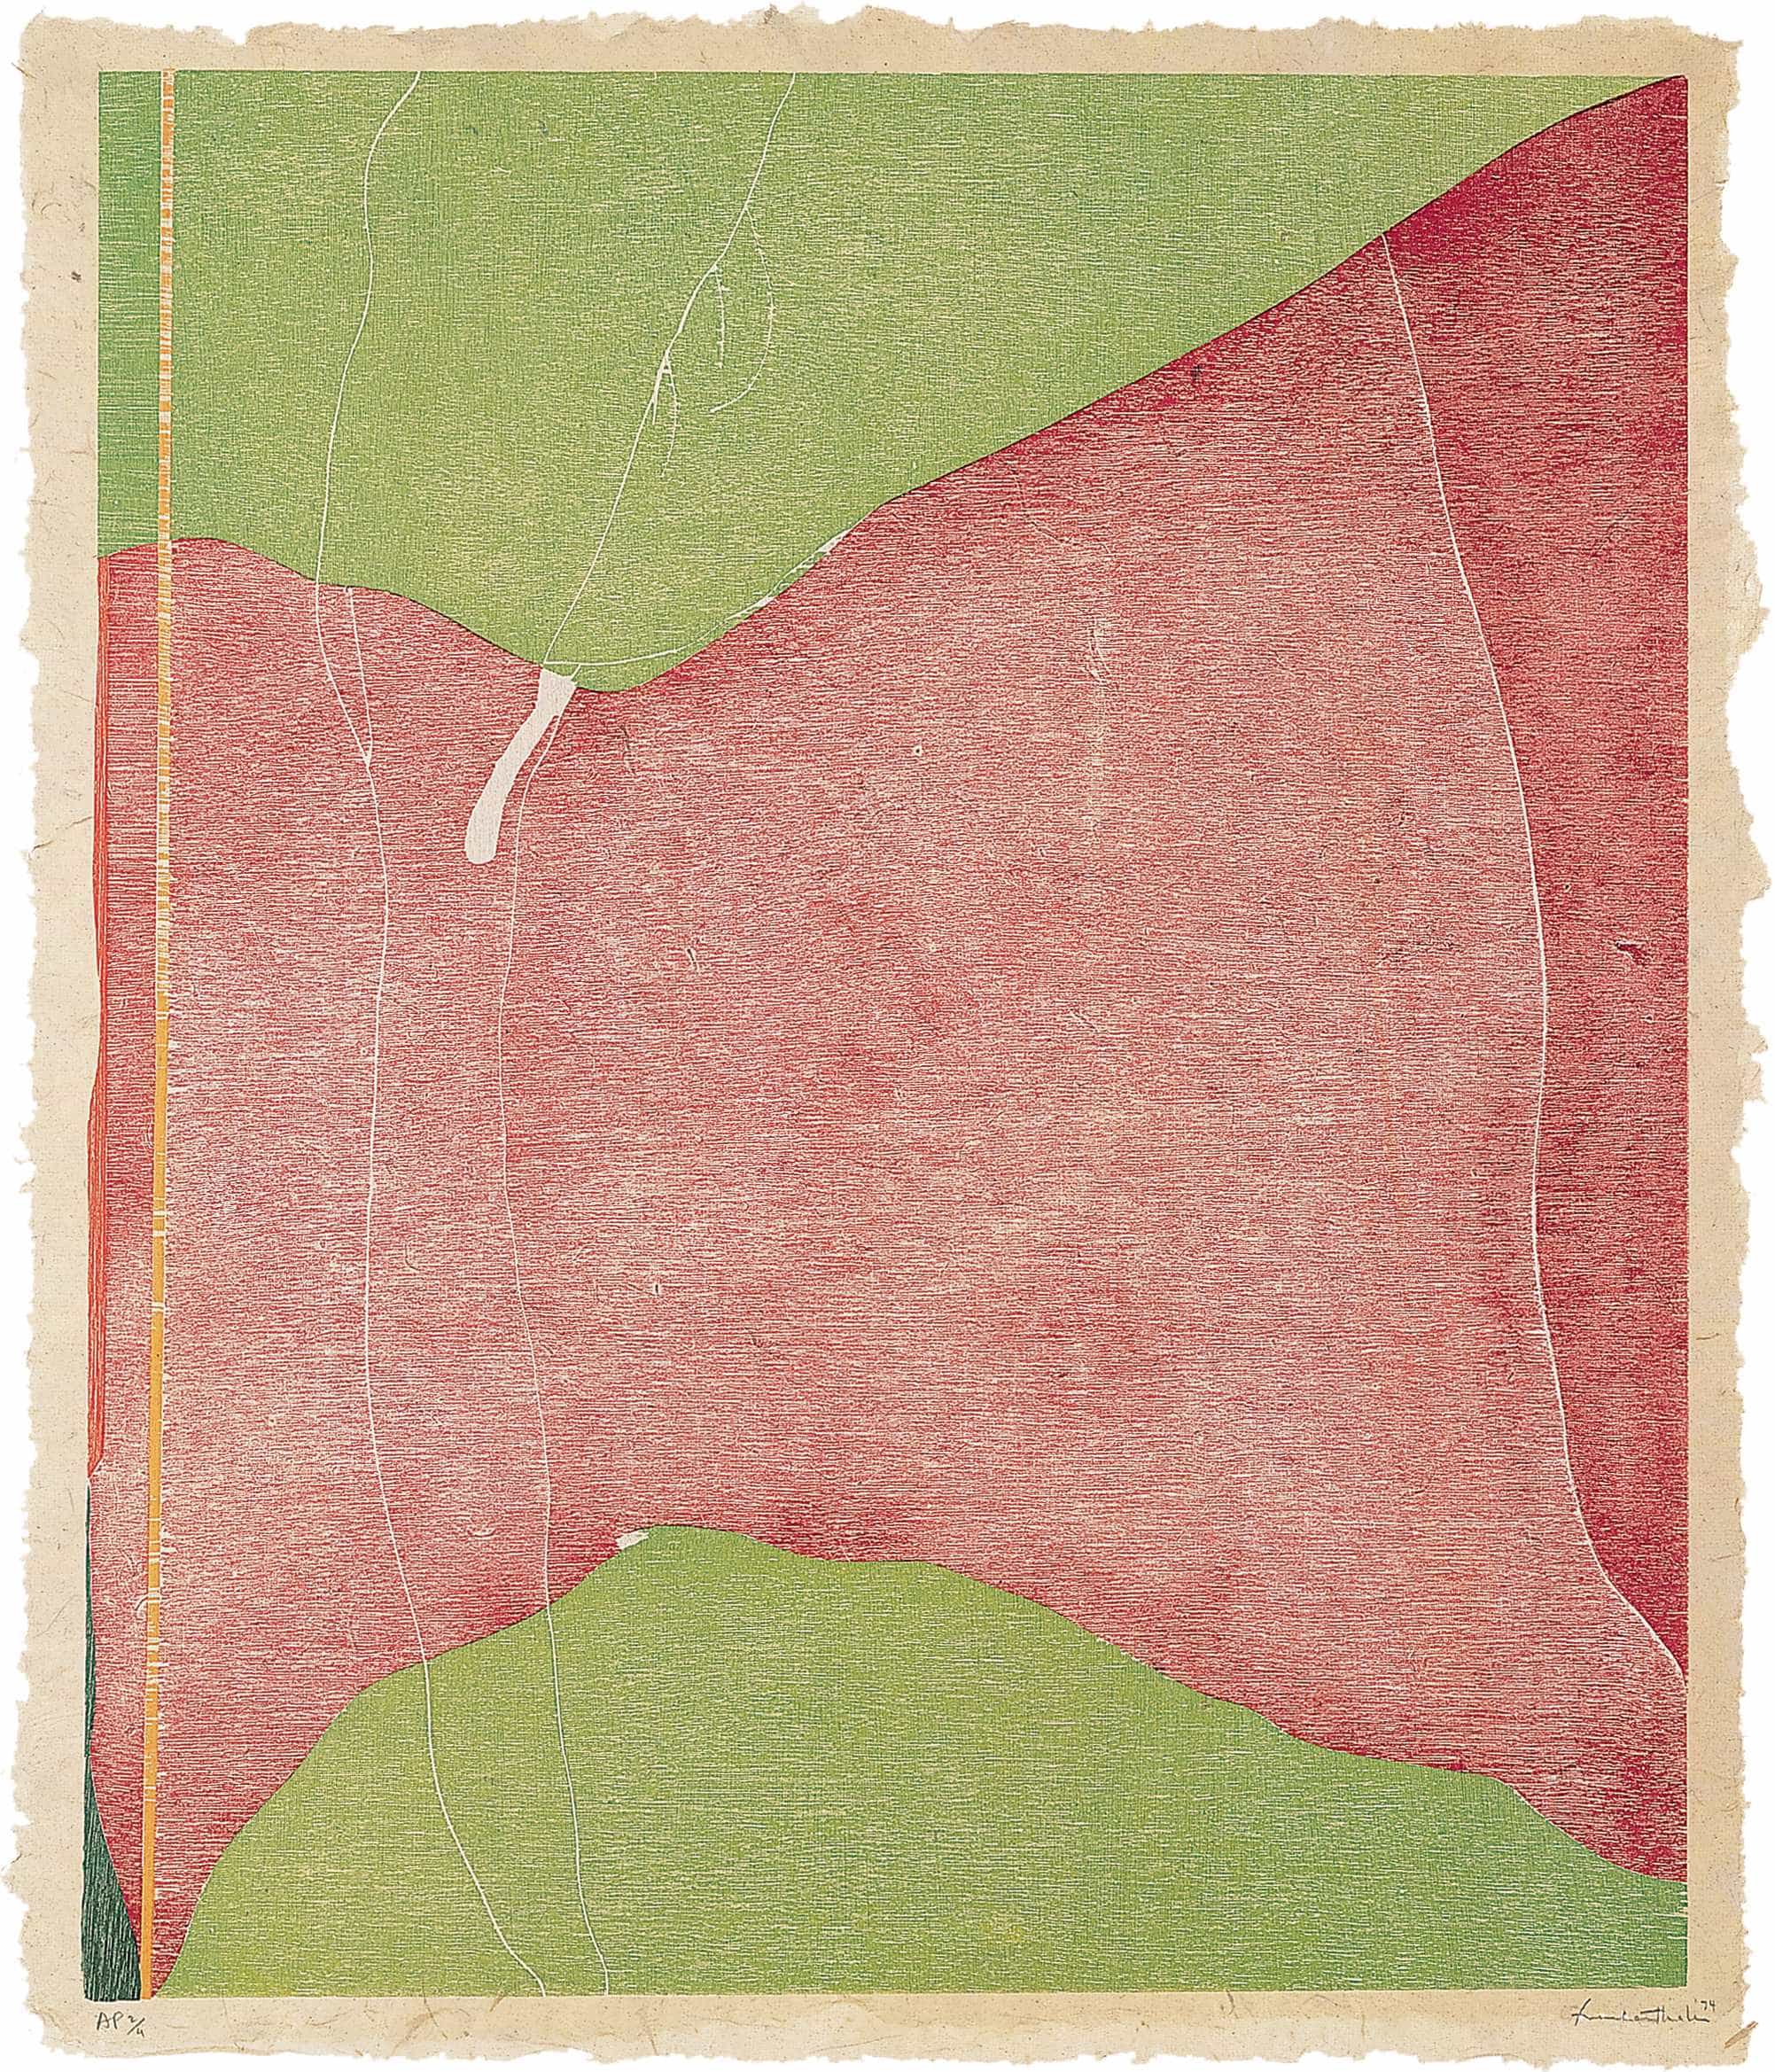 Helen Frankenthaler, Savage Breeze, 1974